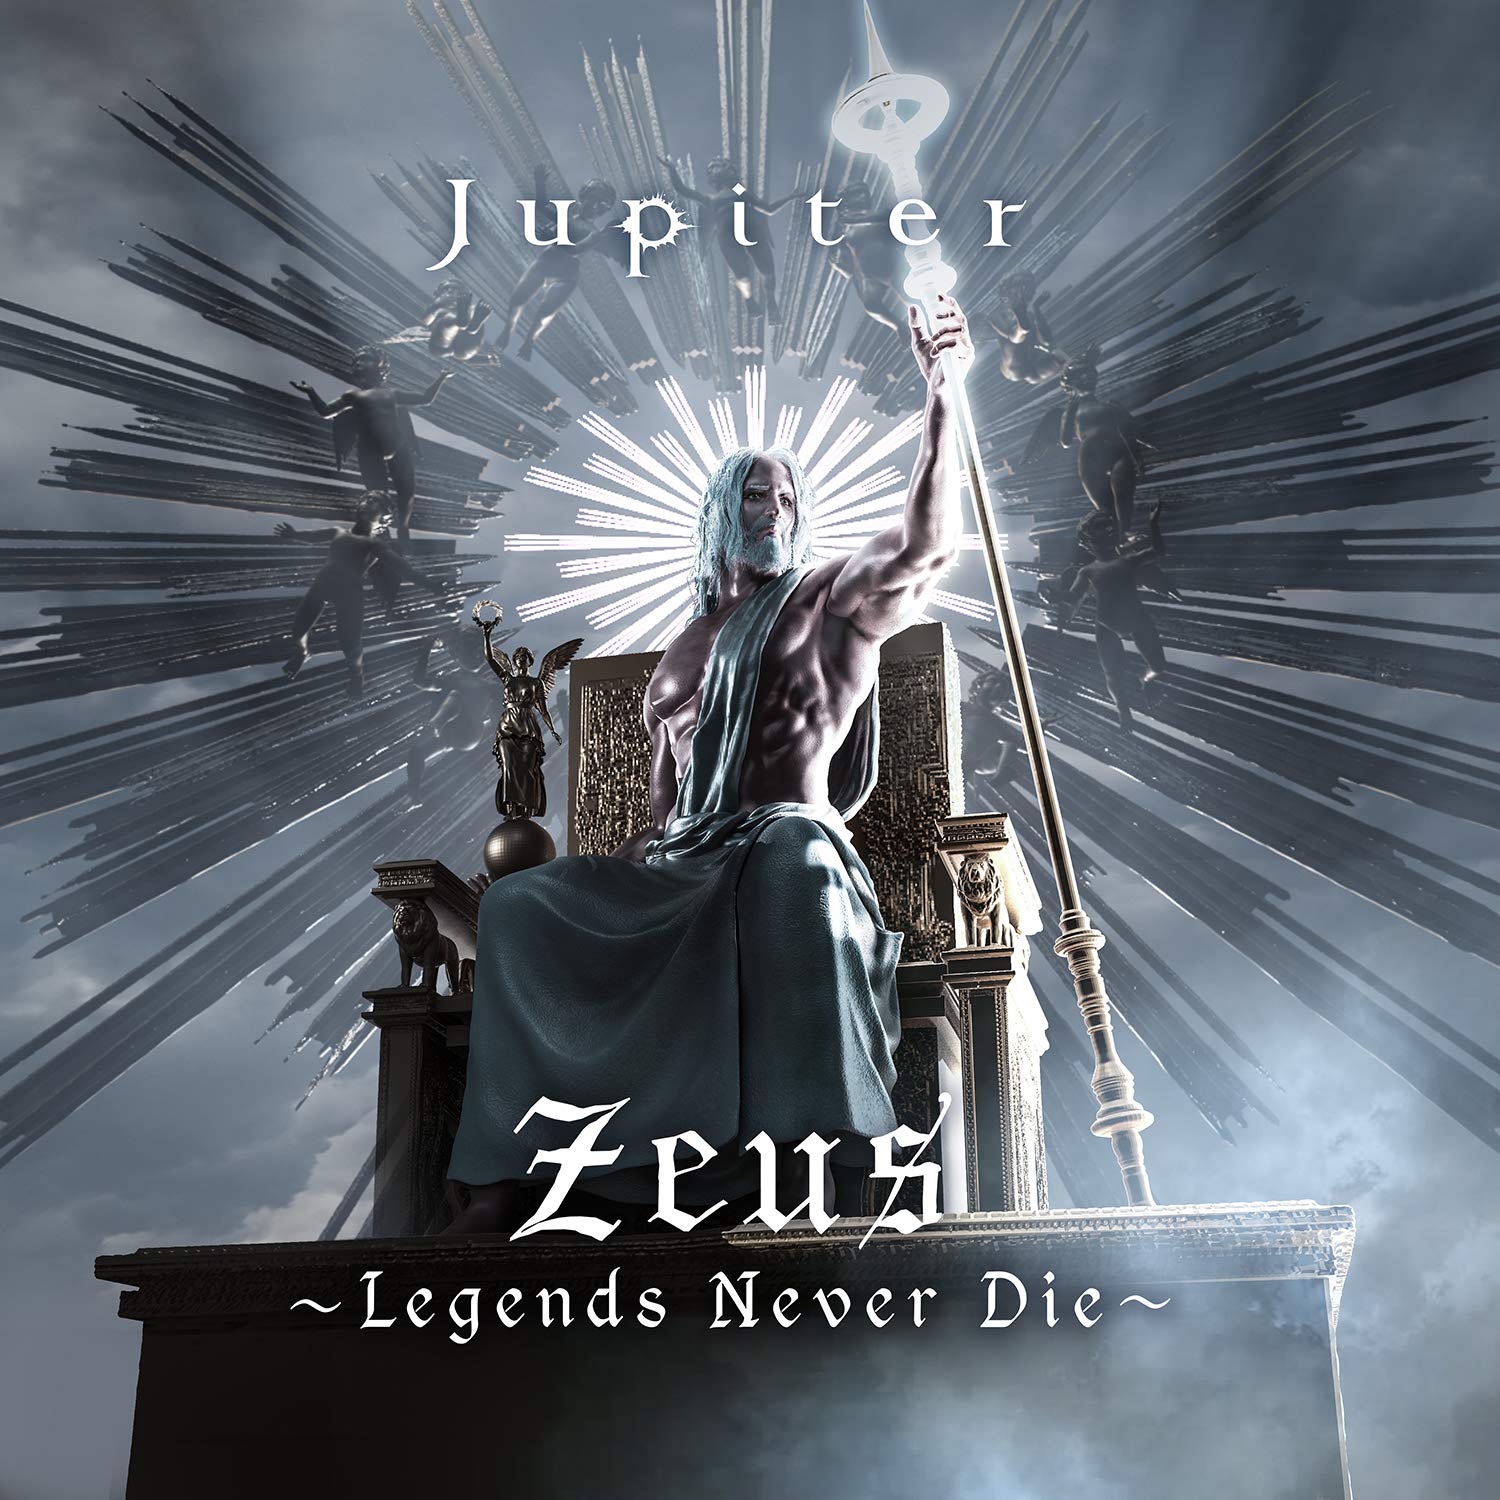 Jupiter/Zeus 〜Legends Never Die〜